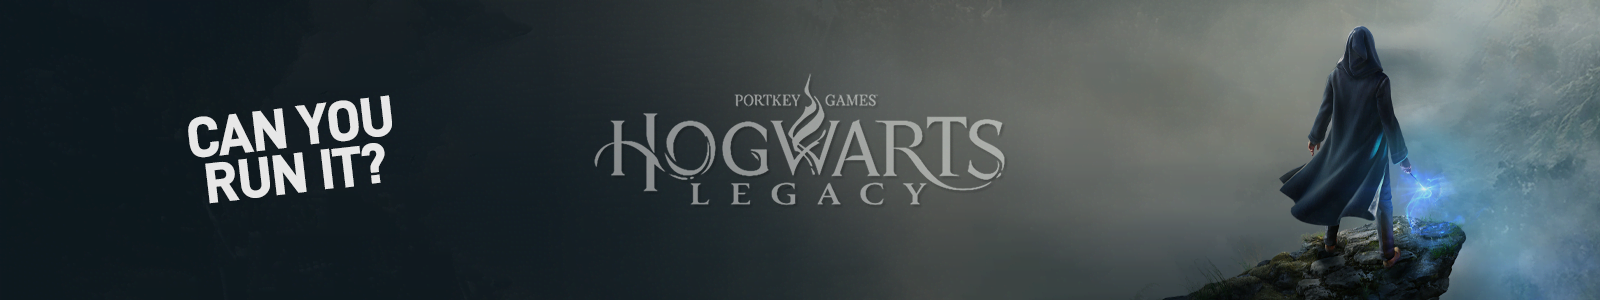 tones-blogpost-hogwarts-legacy-banner-image-1